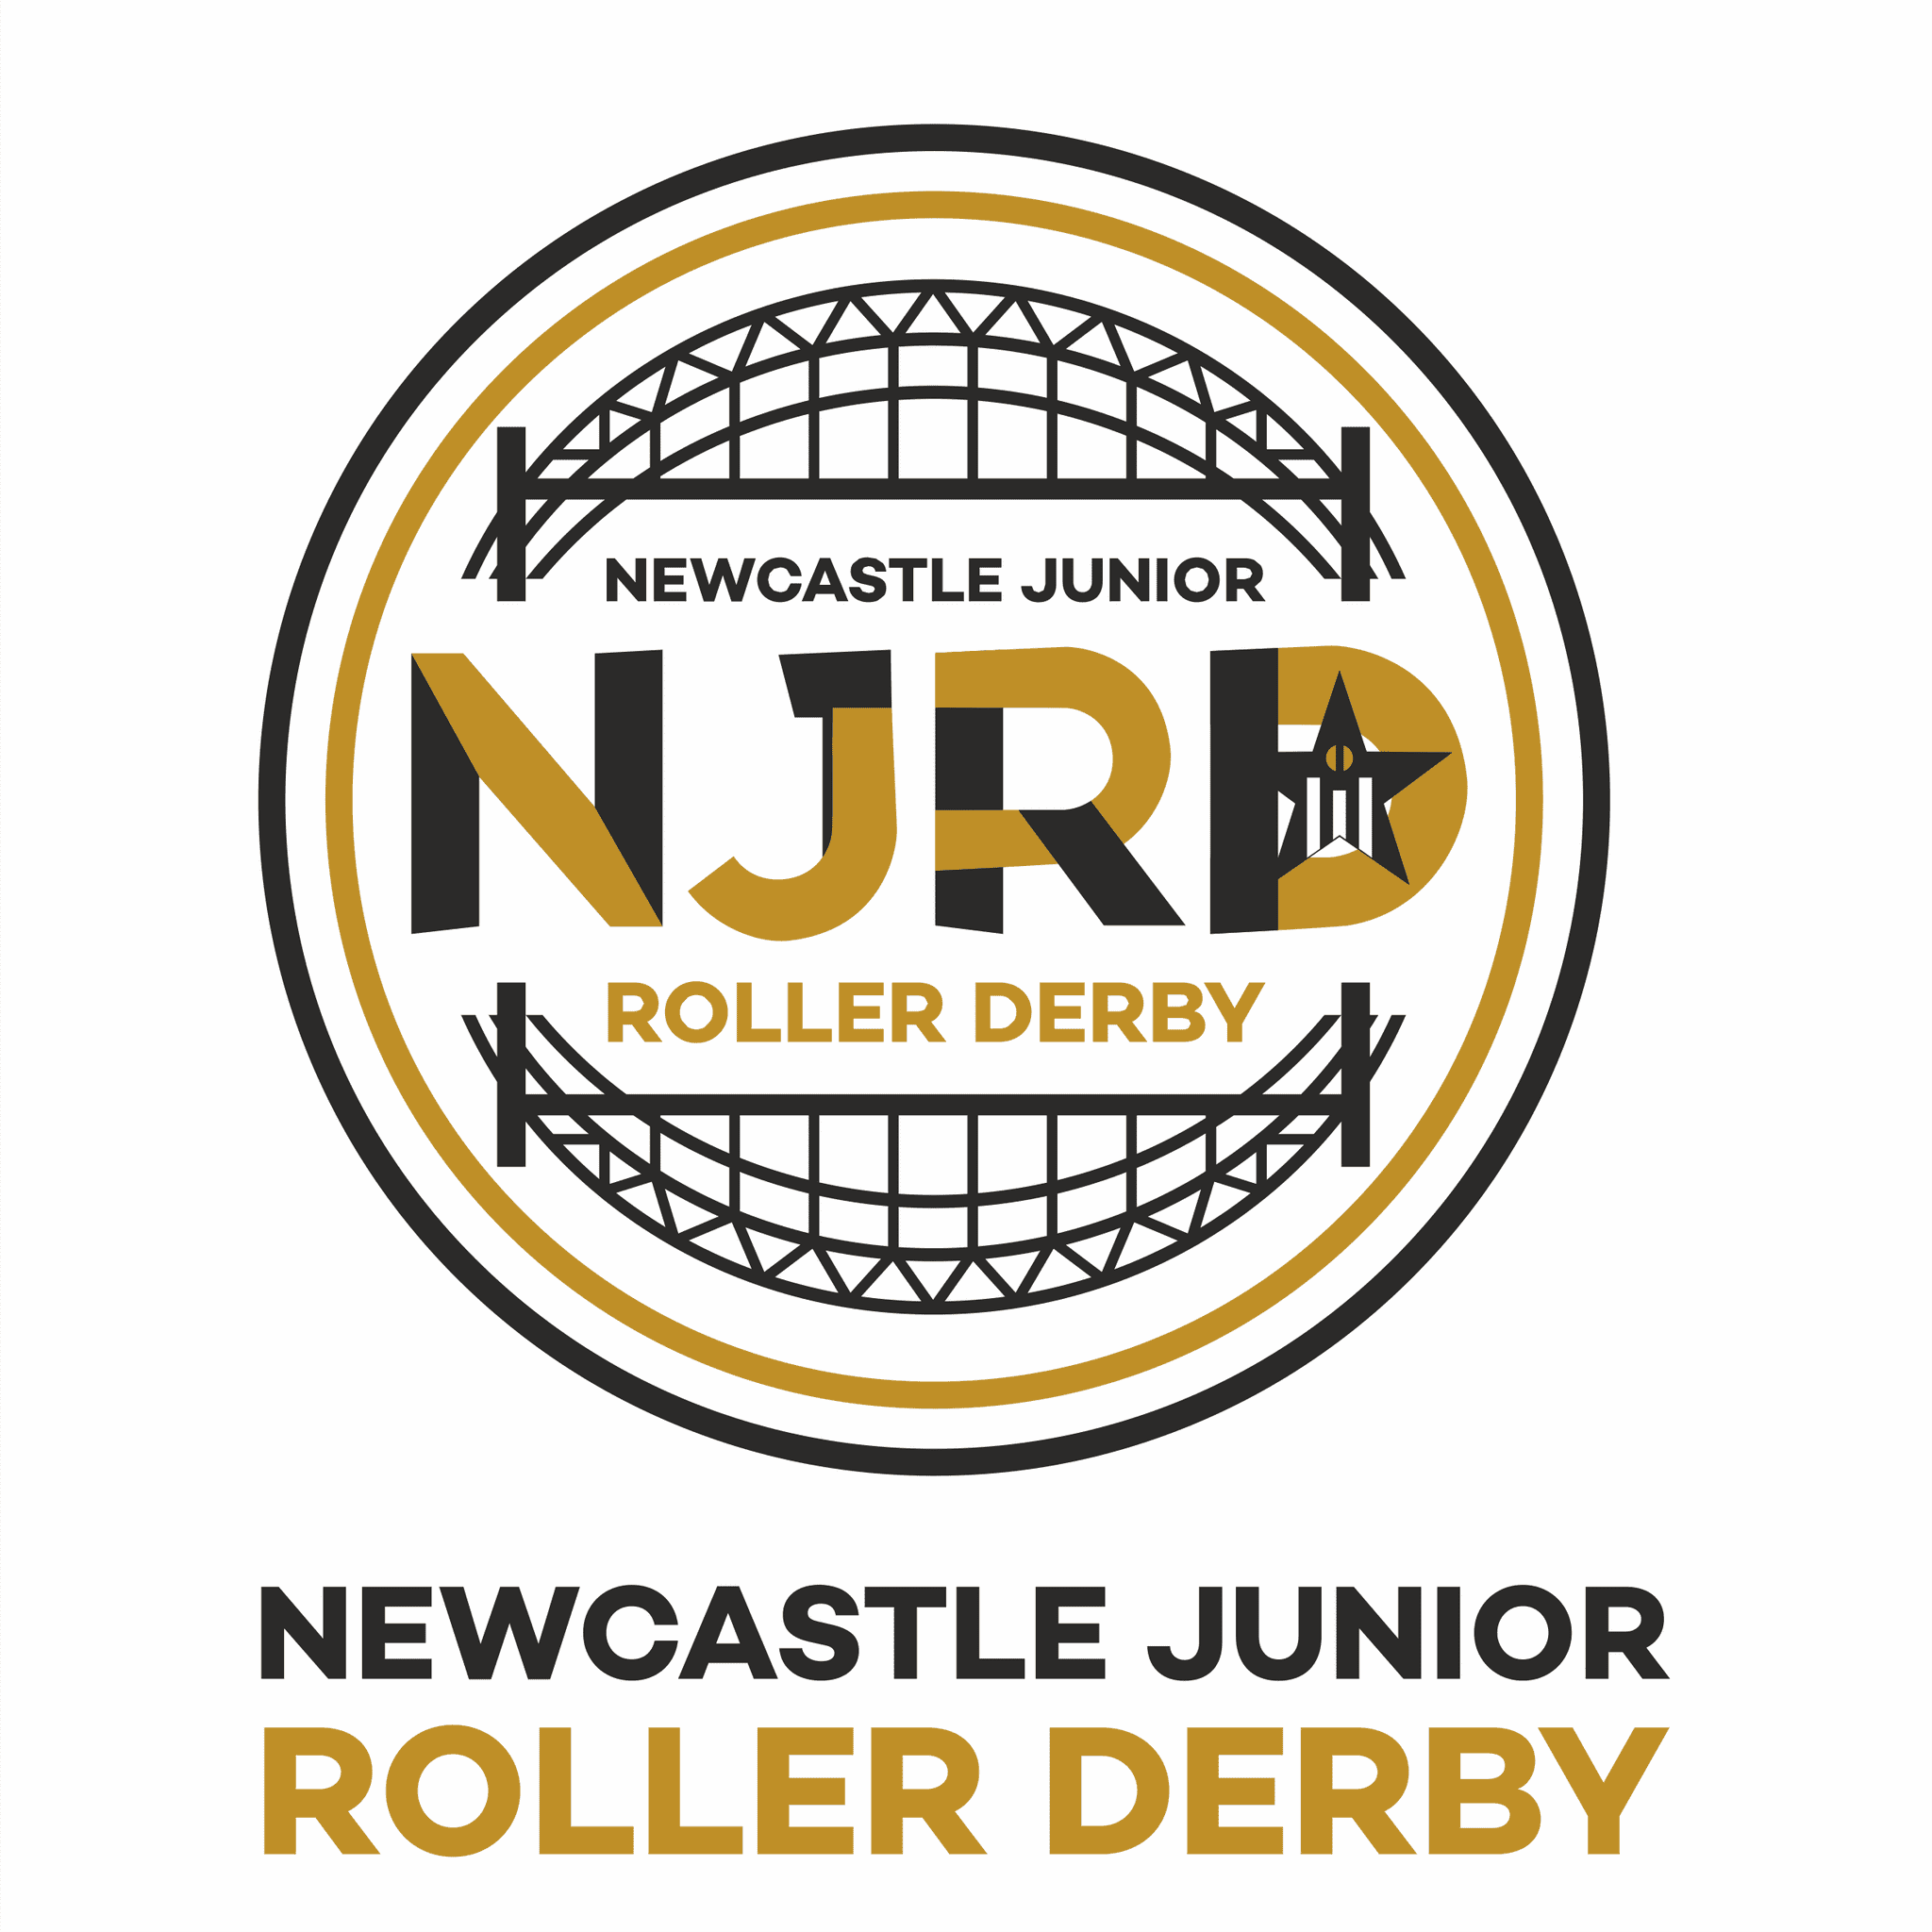 NJRDNewcastle Junior Roller Derby